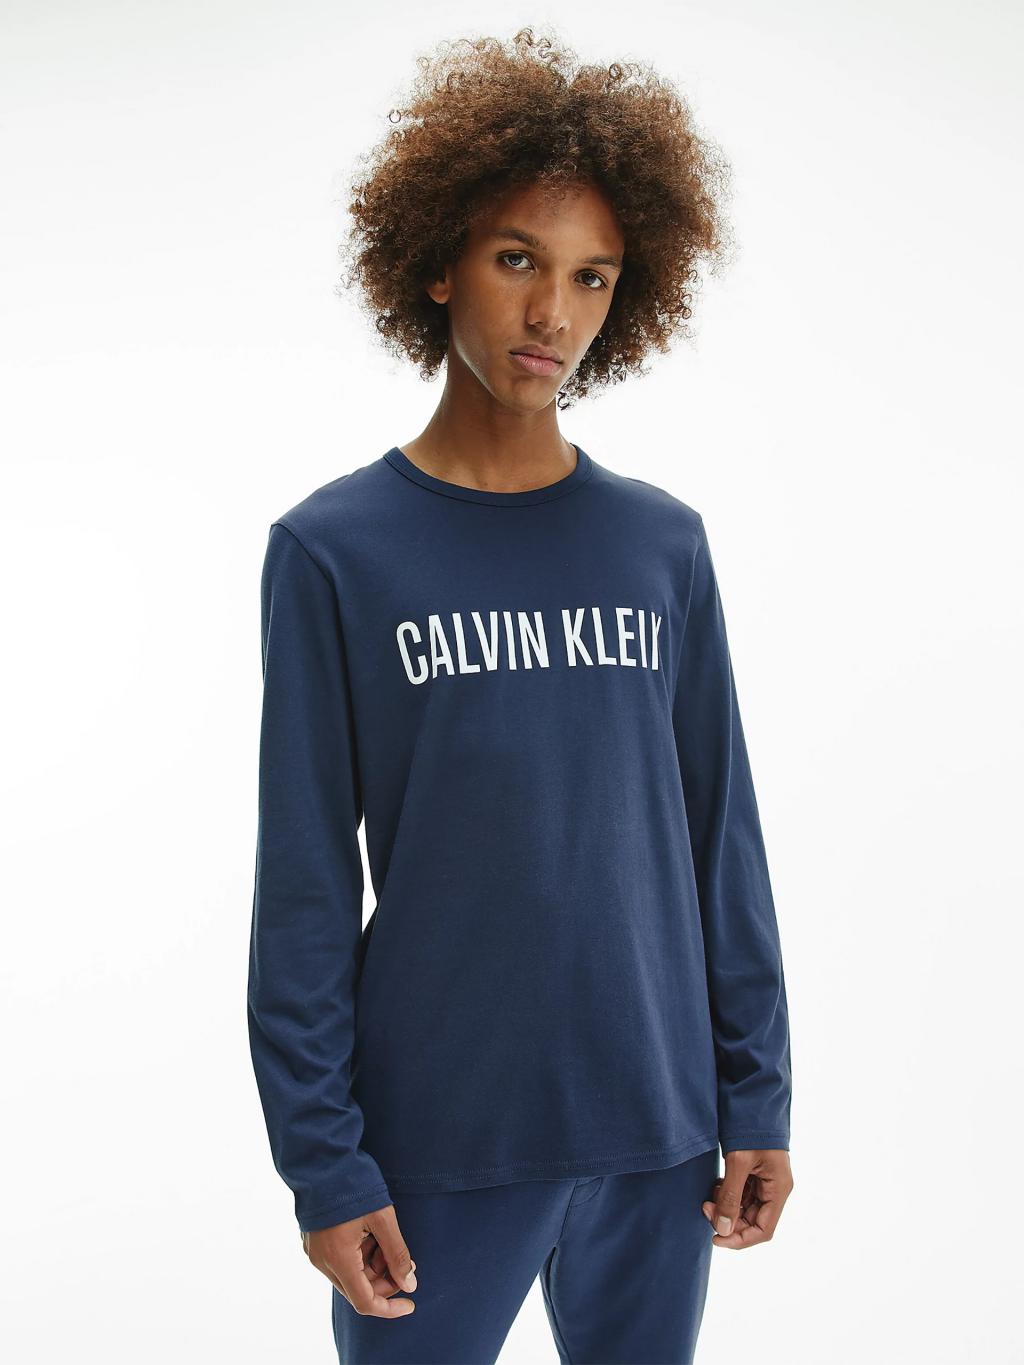 NM1958/8SB - pánské triko Calvin Klein dlouhé